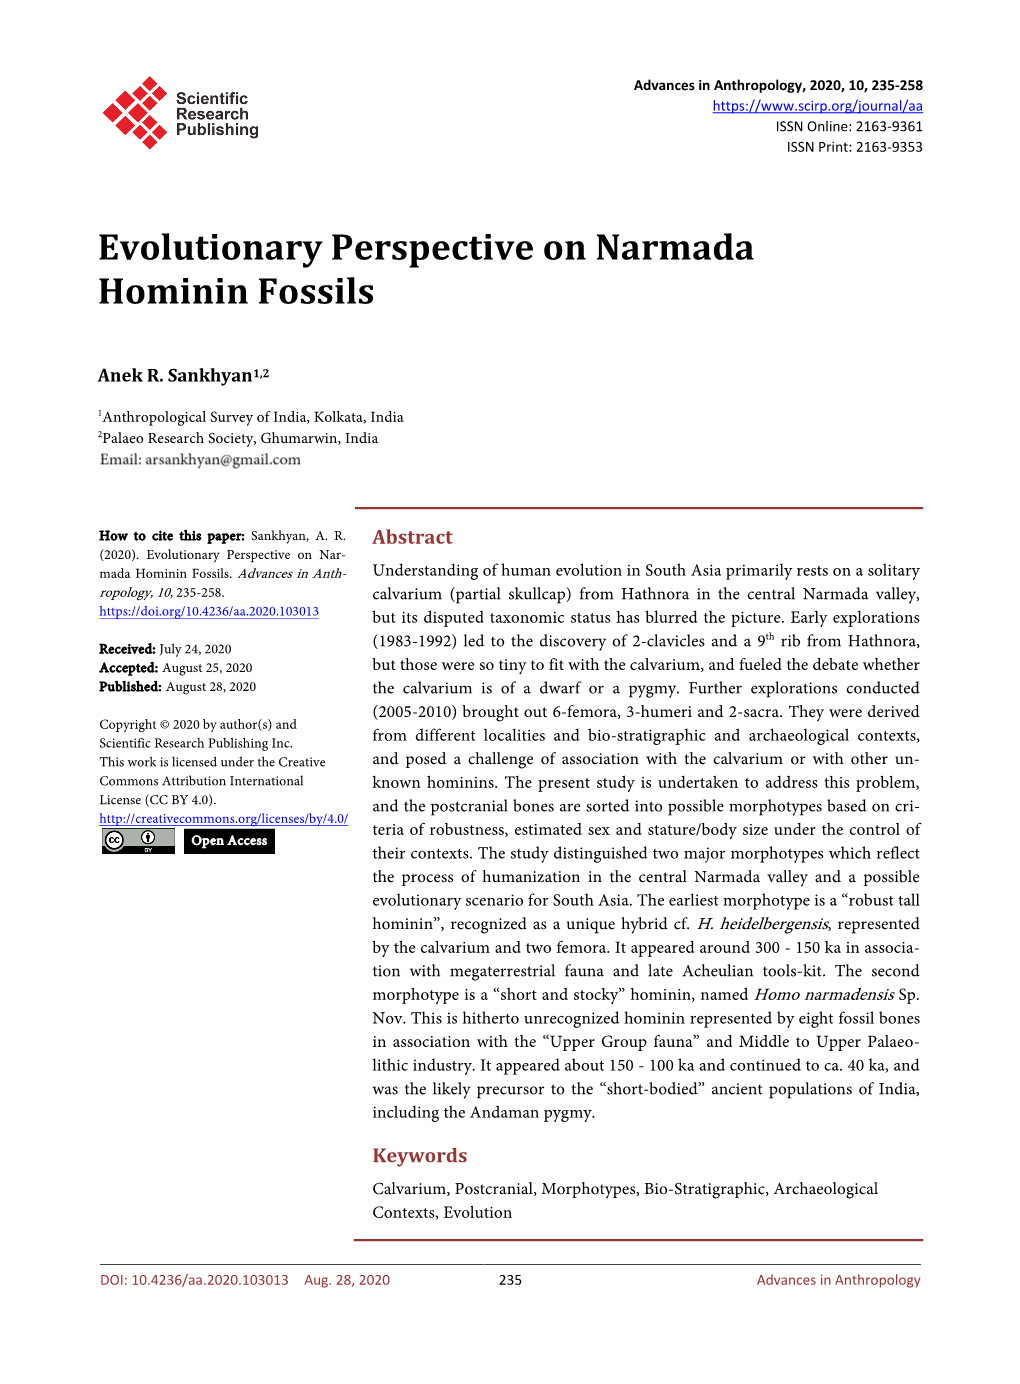 Evolutionary Perspective on Narmada Hominin Fossils